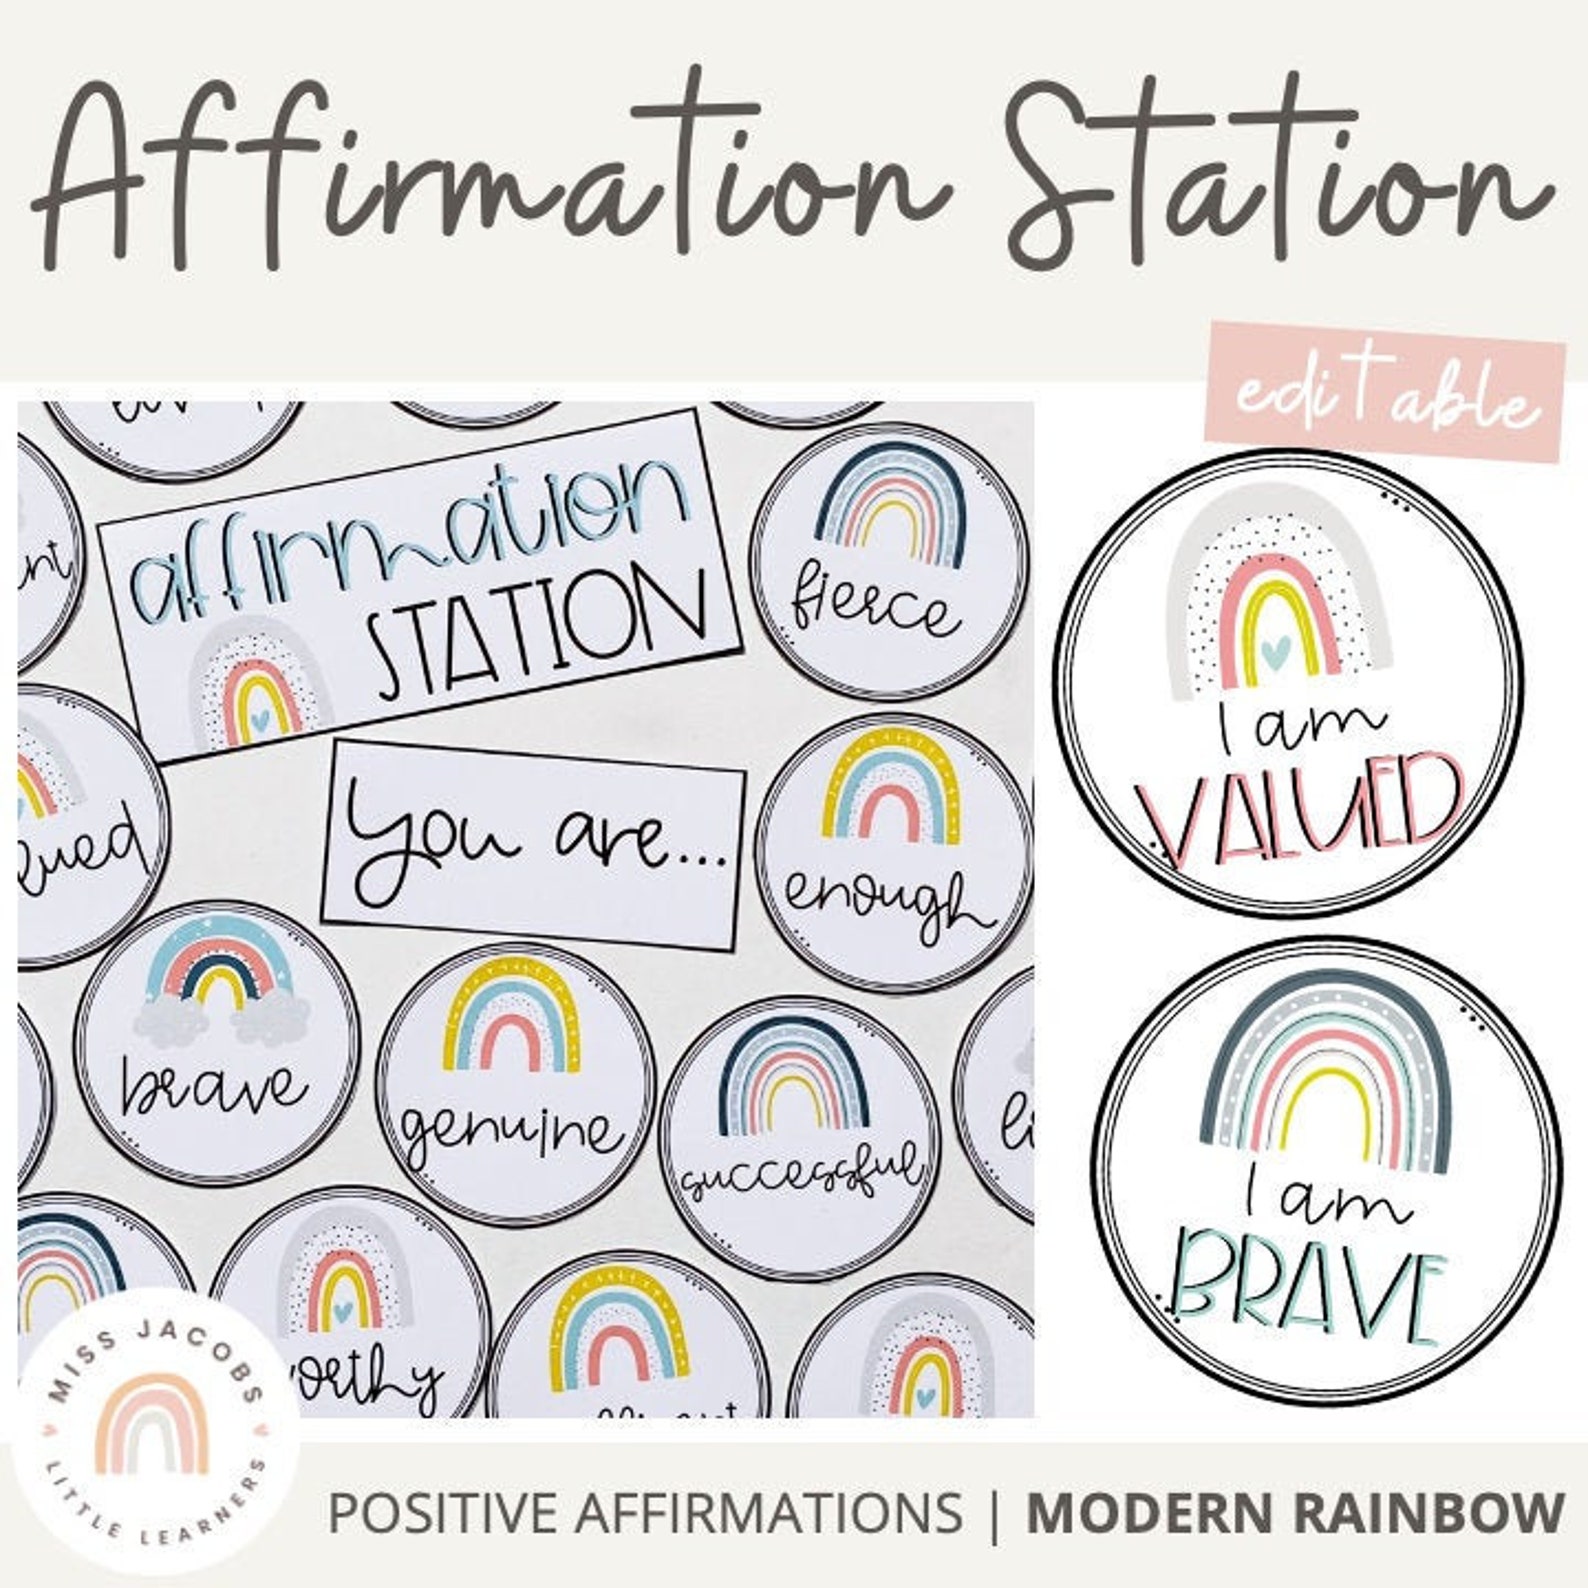 MODERN RAINBOW Affirmation Station Positive Affirmations | Etsy